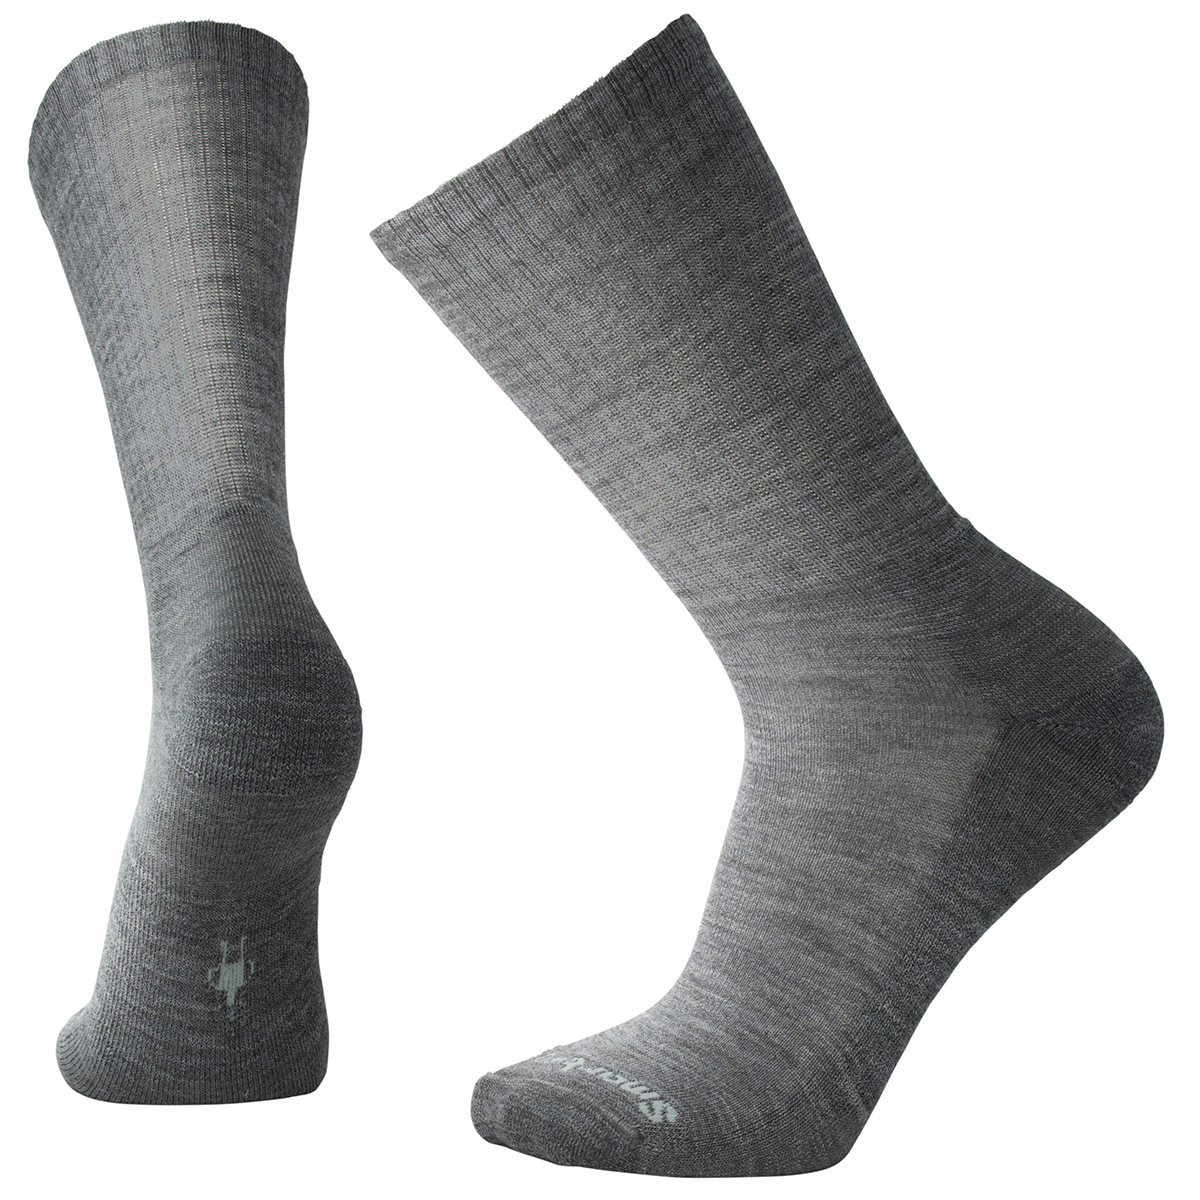 Smartwool Men's Heathered Rib Socks